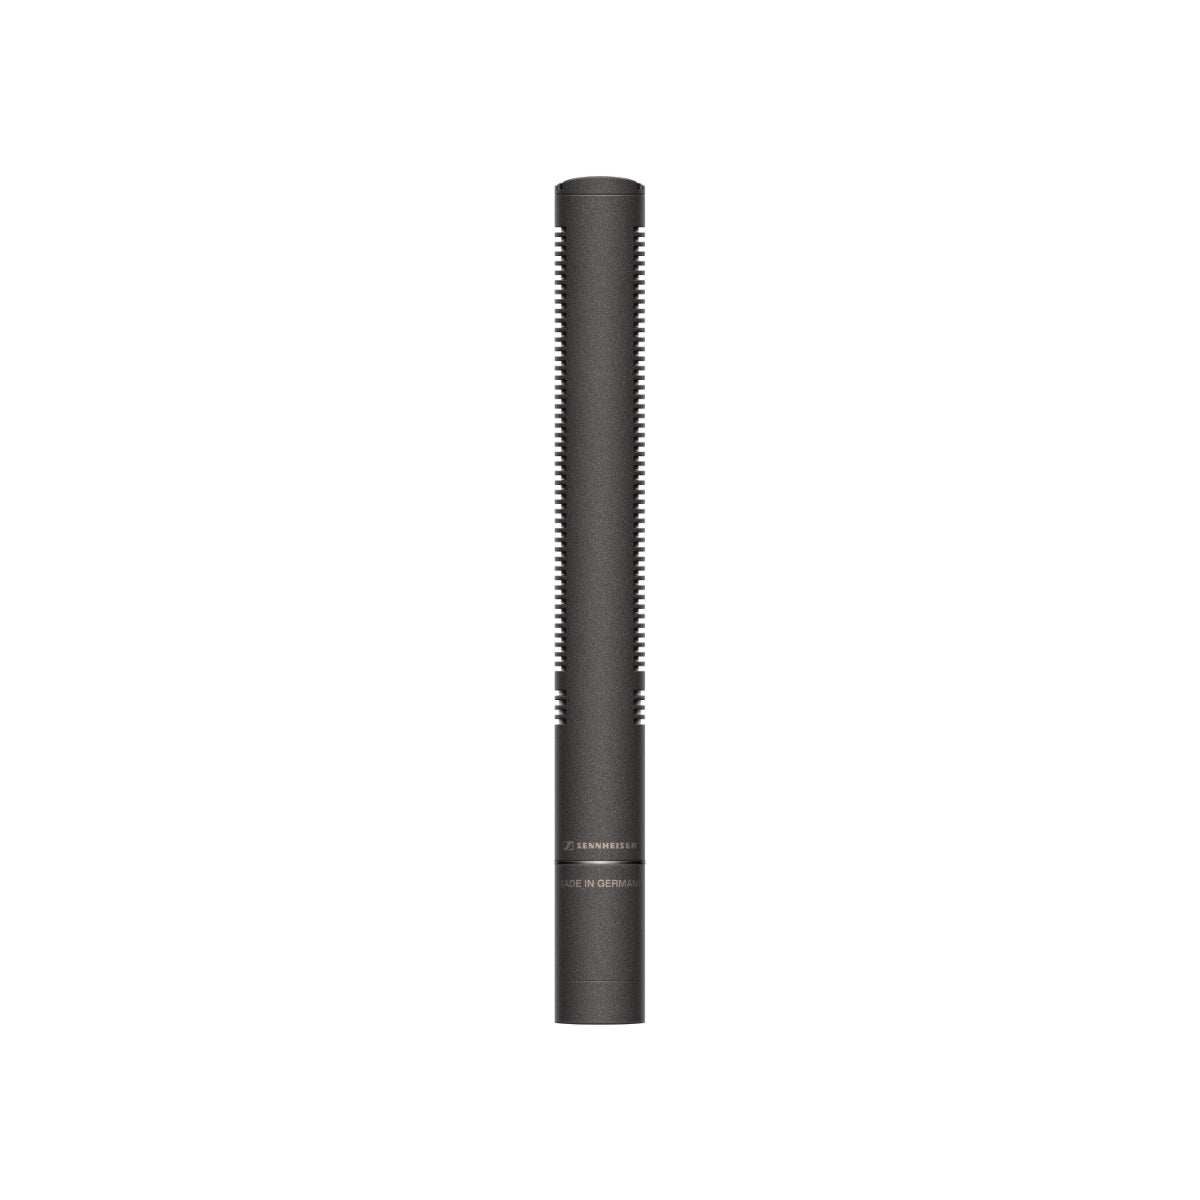 Sennheiser MKH 8060 Redesign Condenser Super Cardioid/Lobar Microphone, With XLR Module, Black